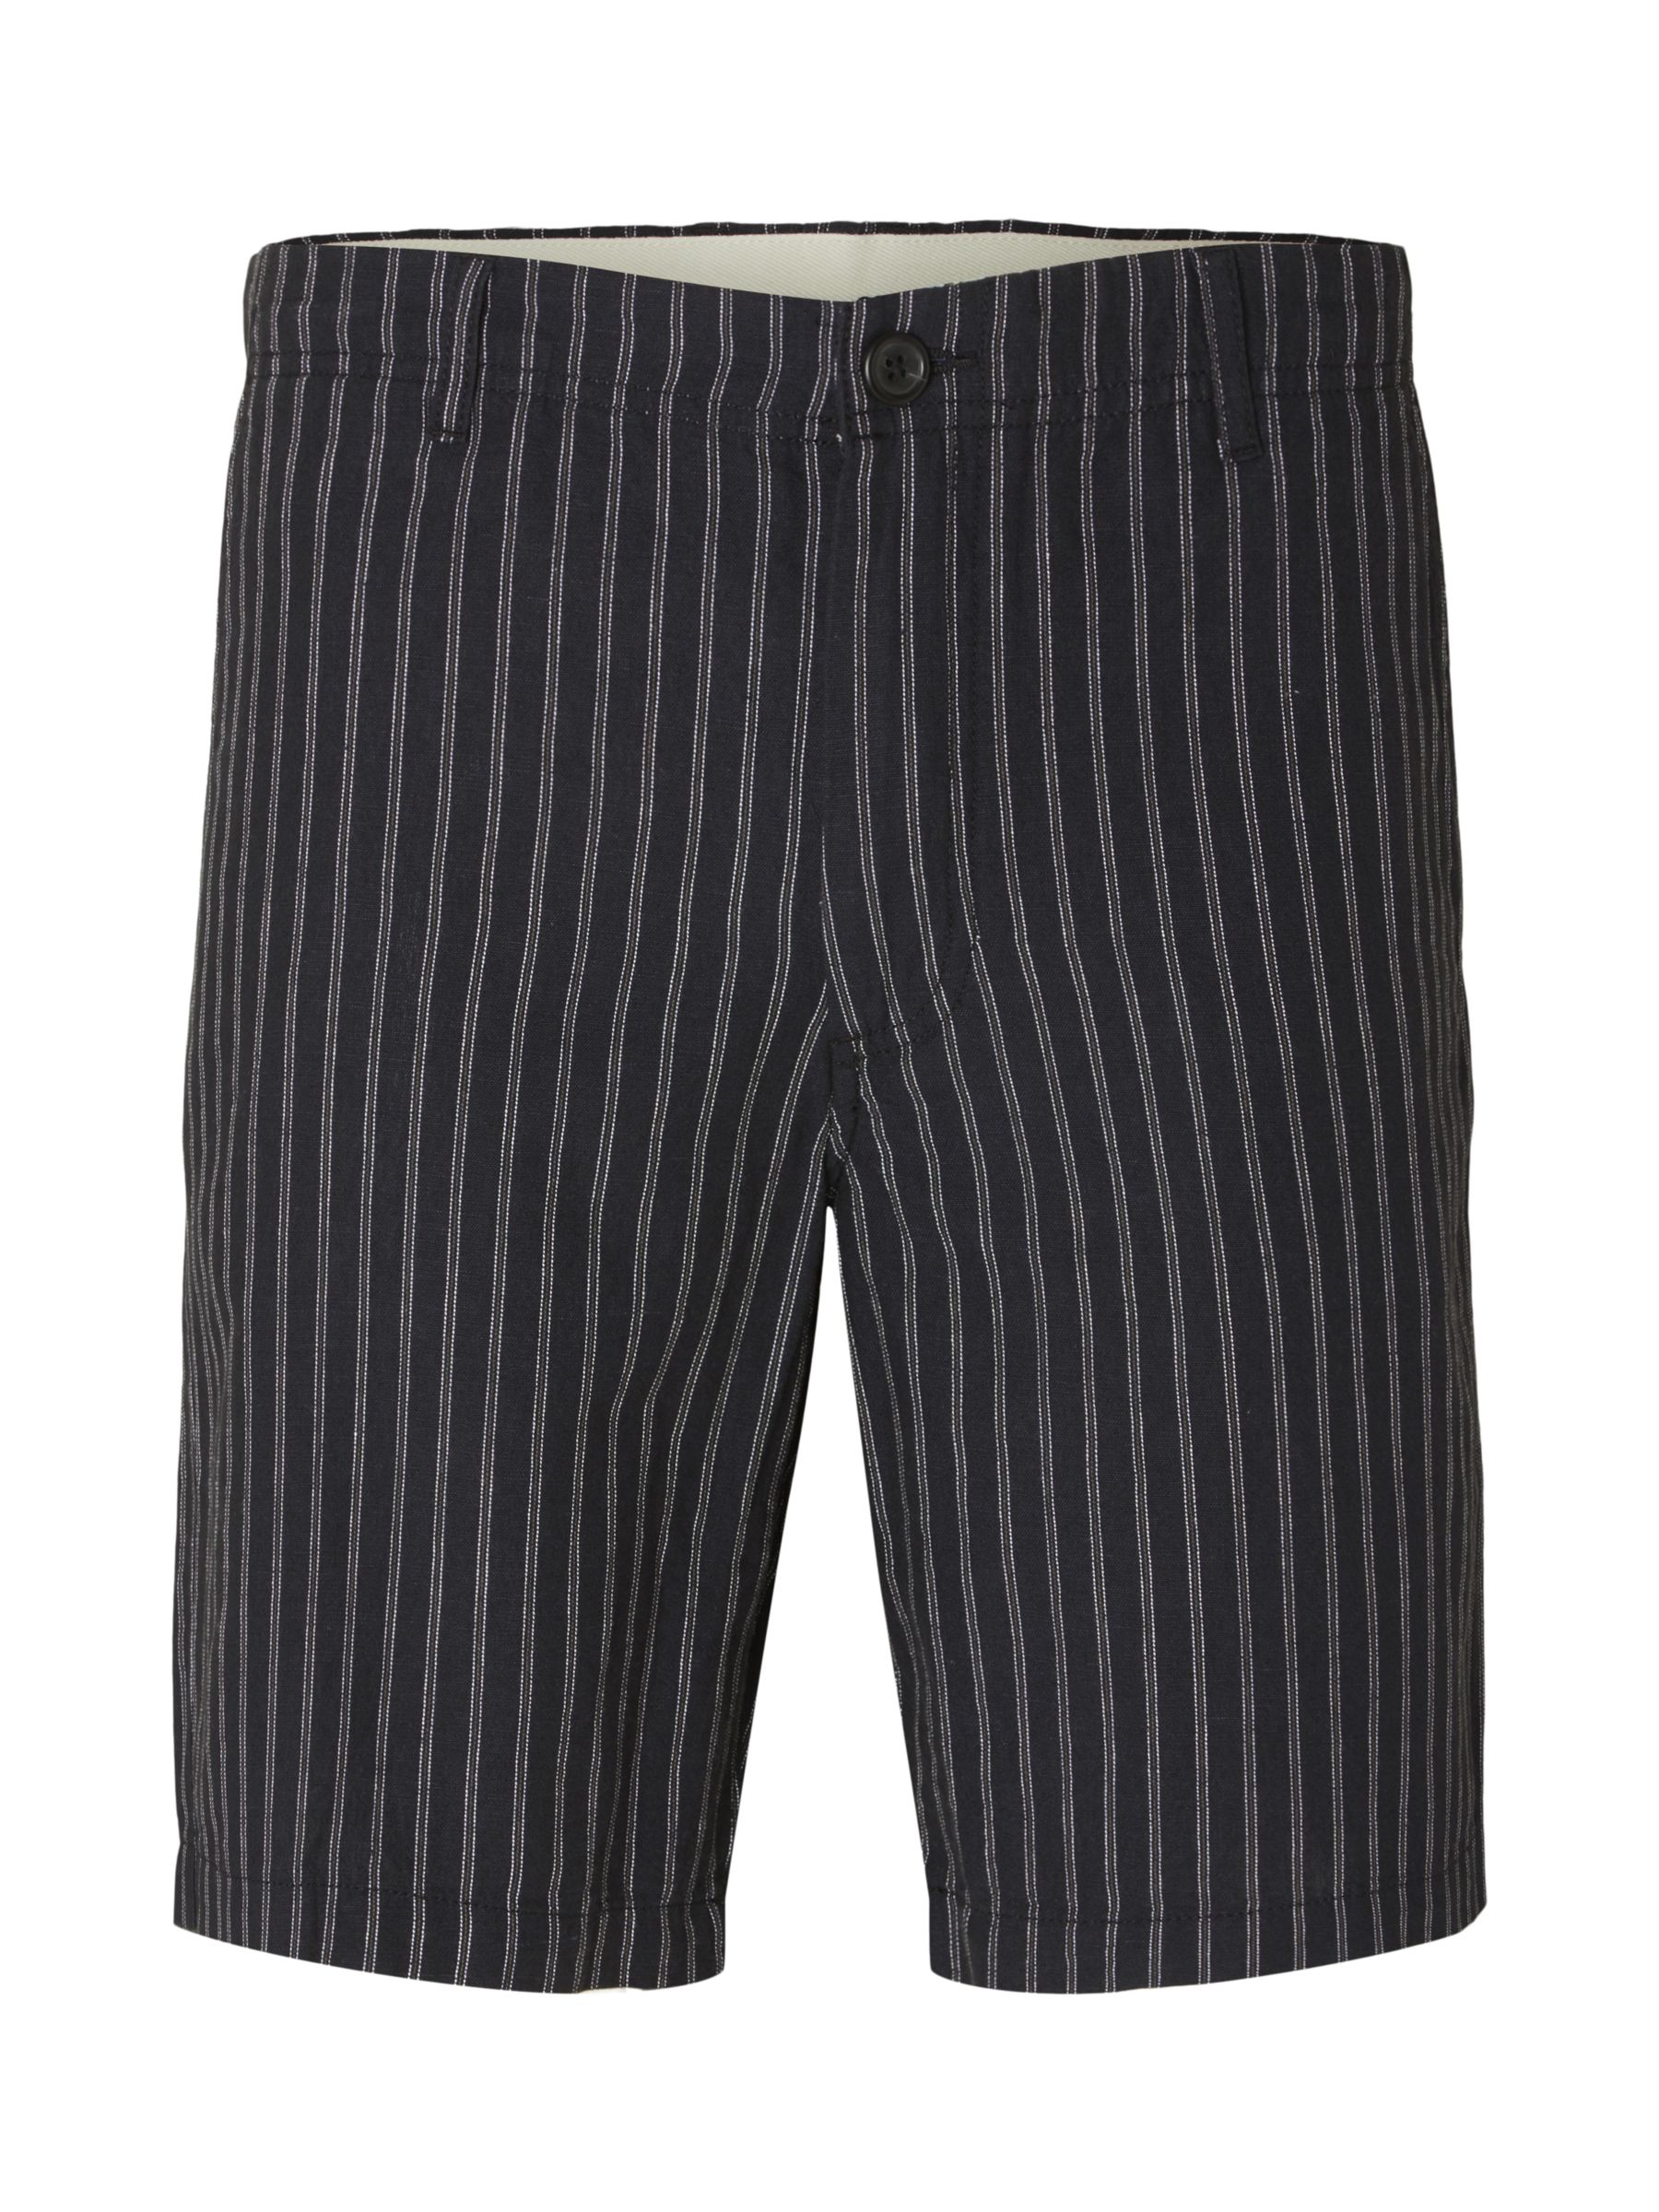 Buy SELECTED HOMME Linen Shorts, Black/Brown Online at johnlewis.com